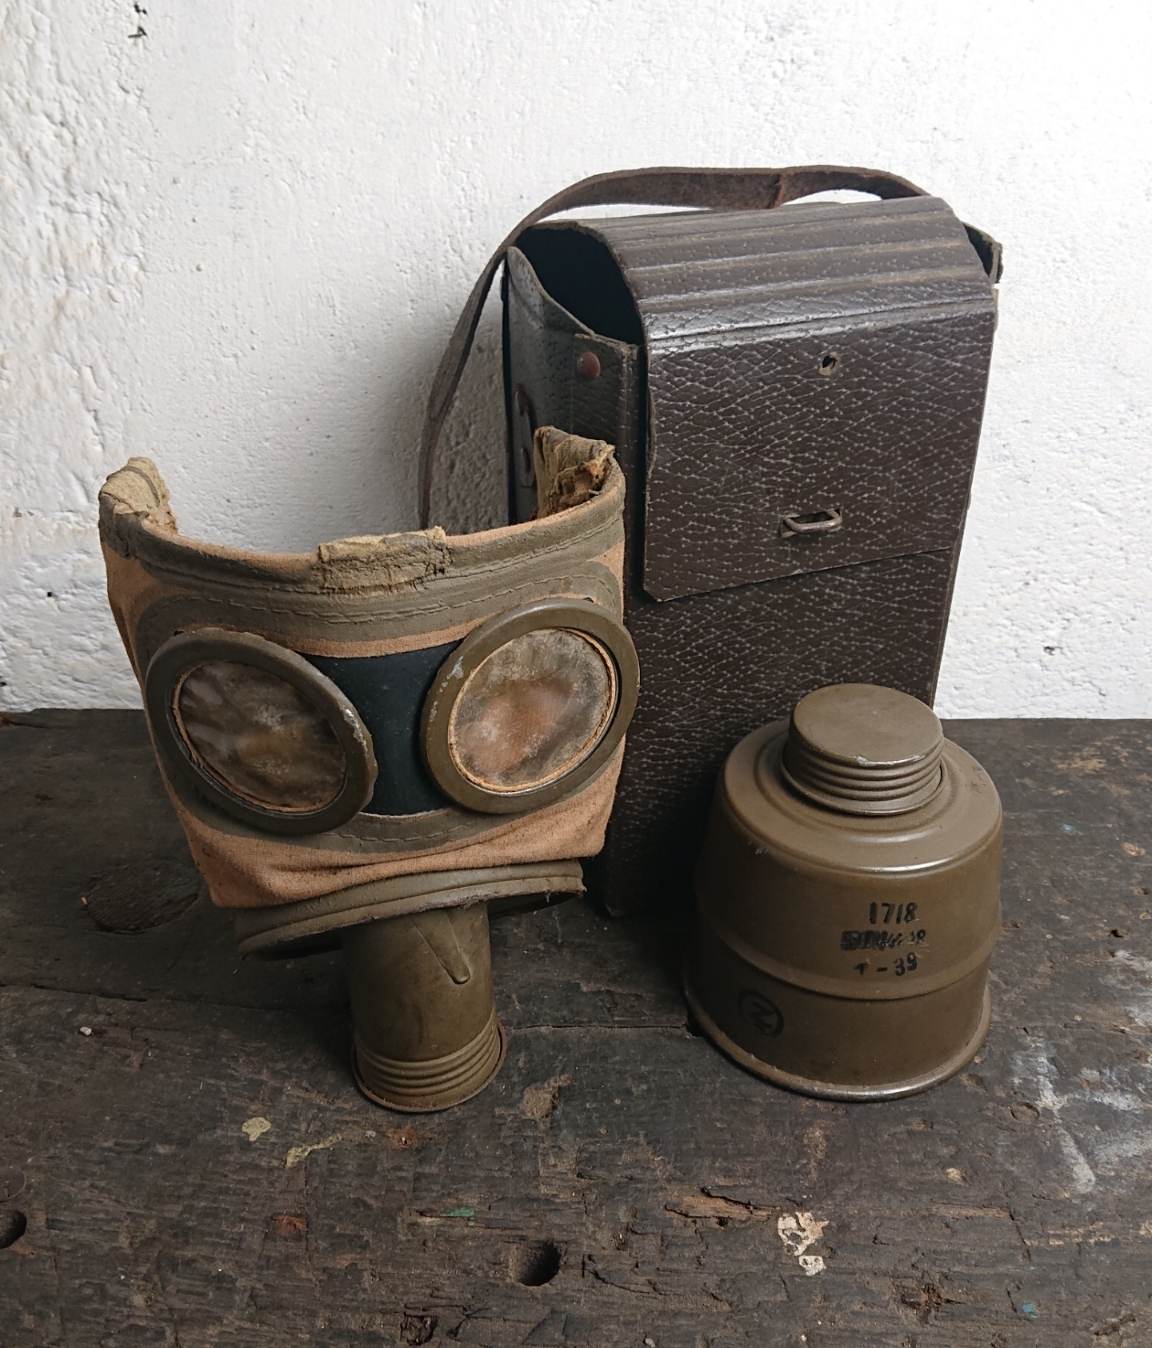 militaria : Masque à gaz DP sac personnel / ww2 Gas mask DP personal bag